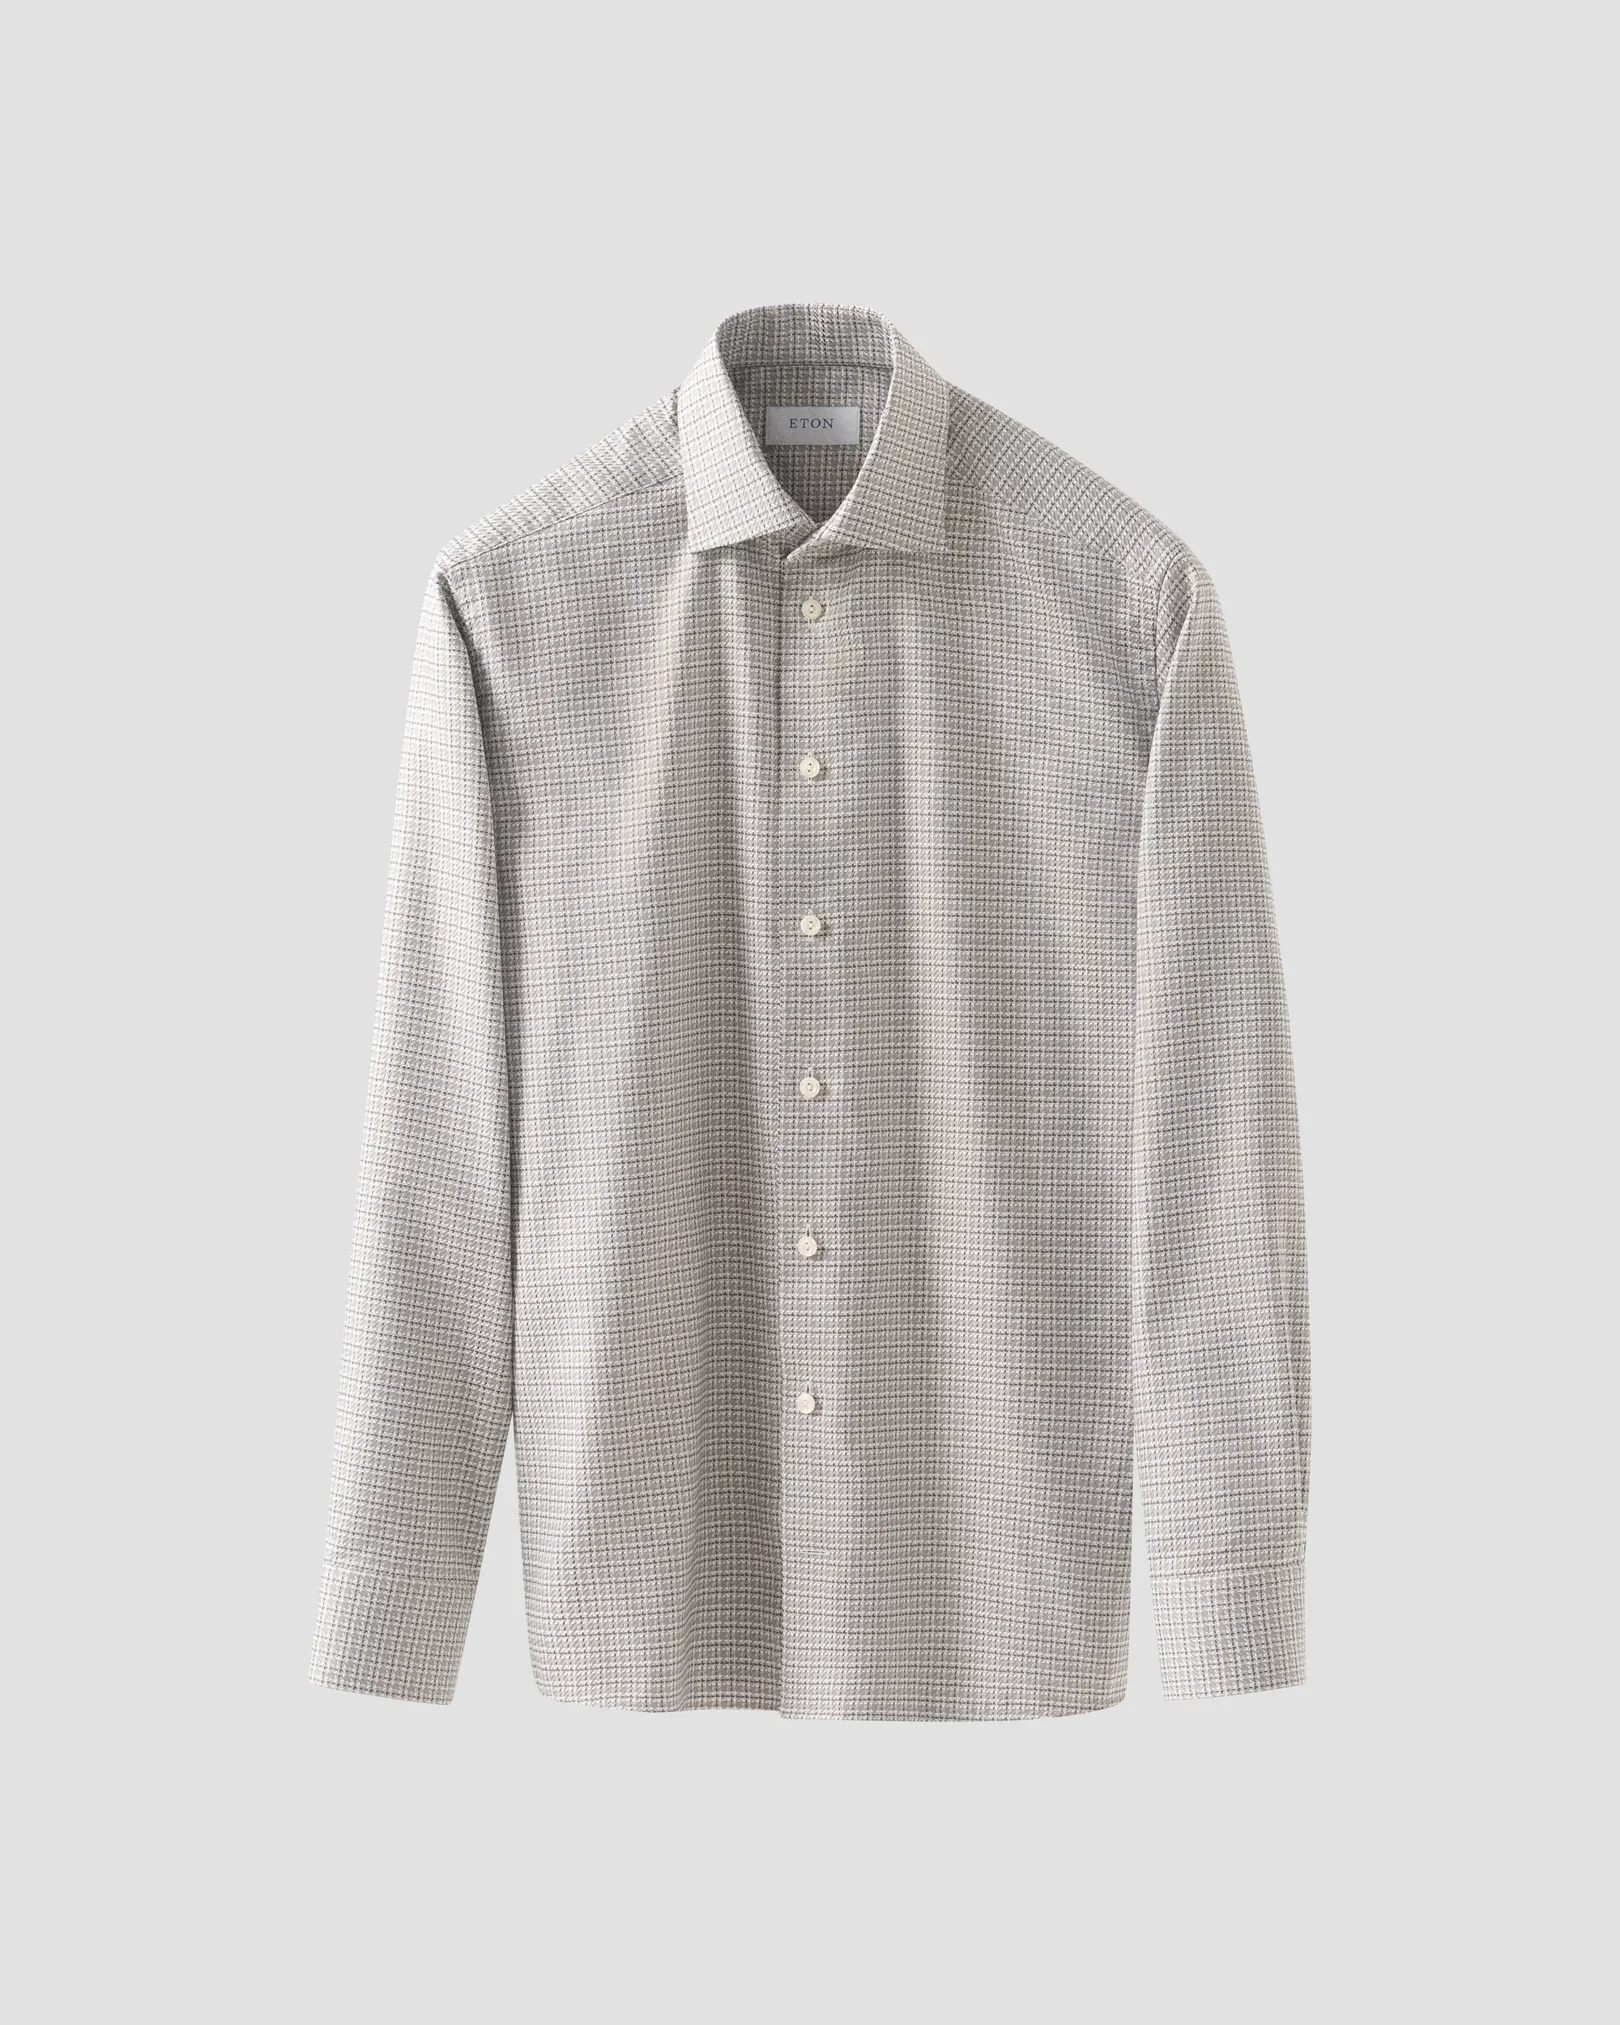 Eton - Gray Checked King Twill Shirt